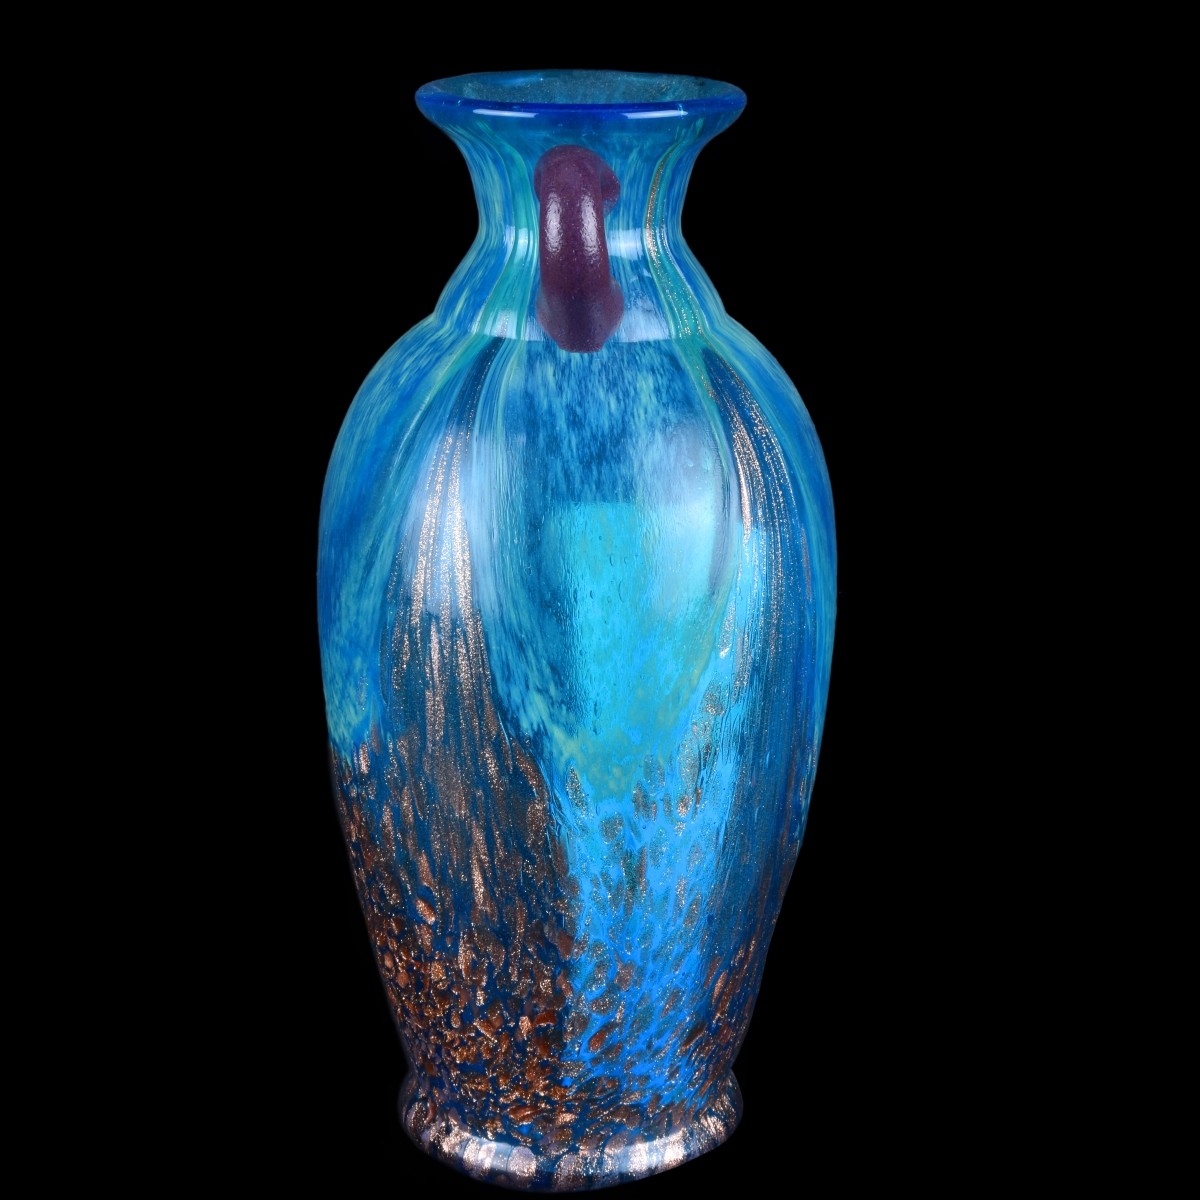 Three Art Glass Vases